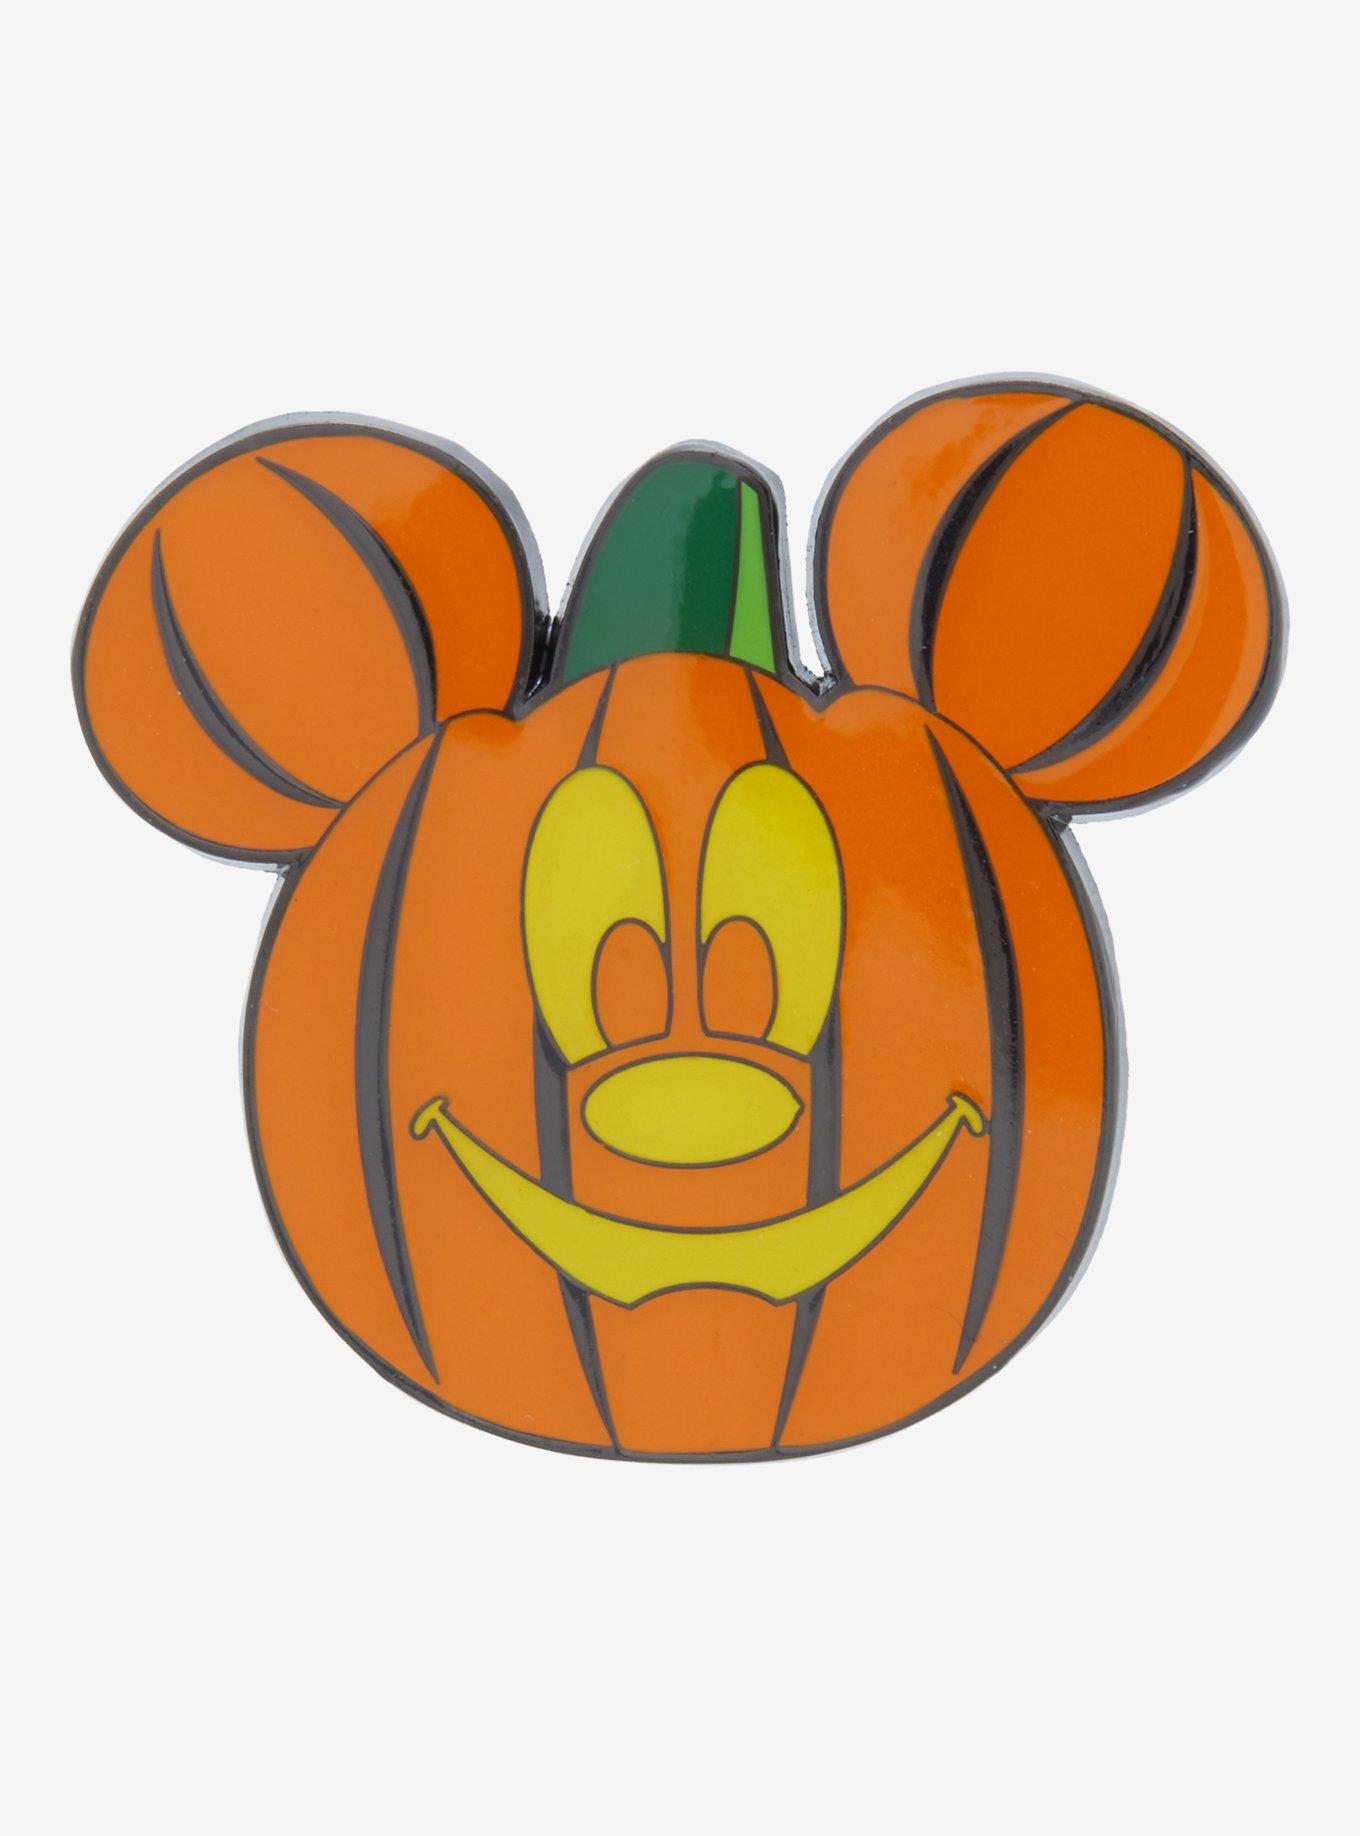 Torrid 3X Disney Mickey Mouse Orange Halloween Pumpkin Black Legging Size  22-24